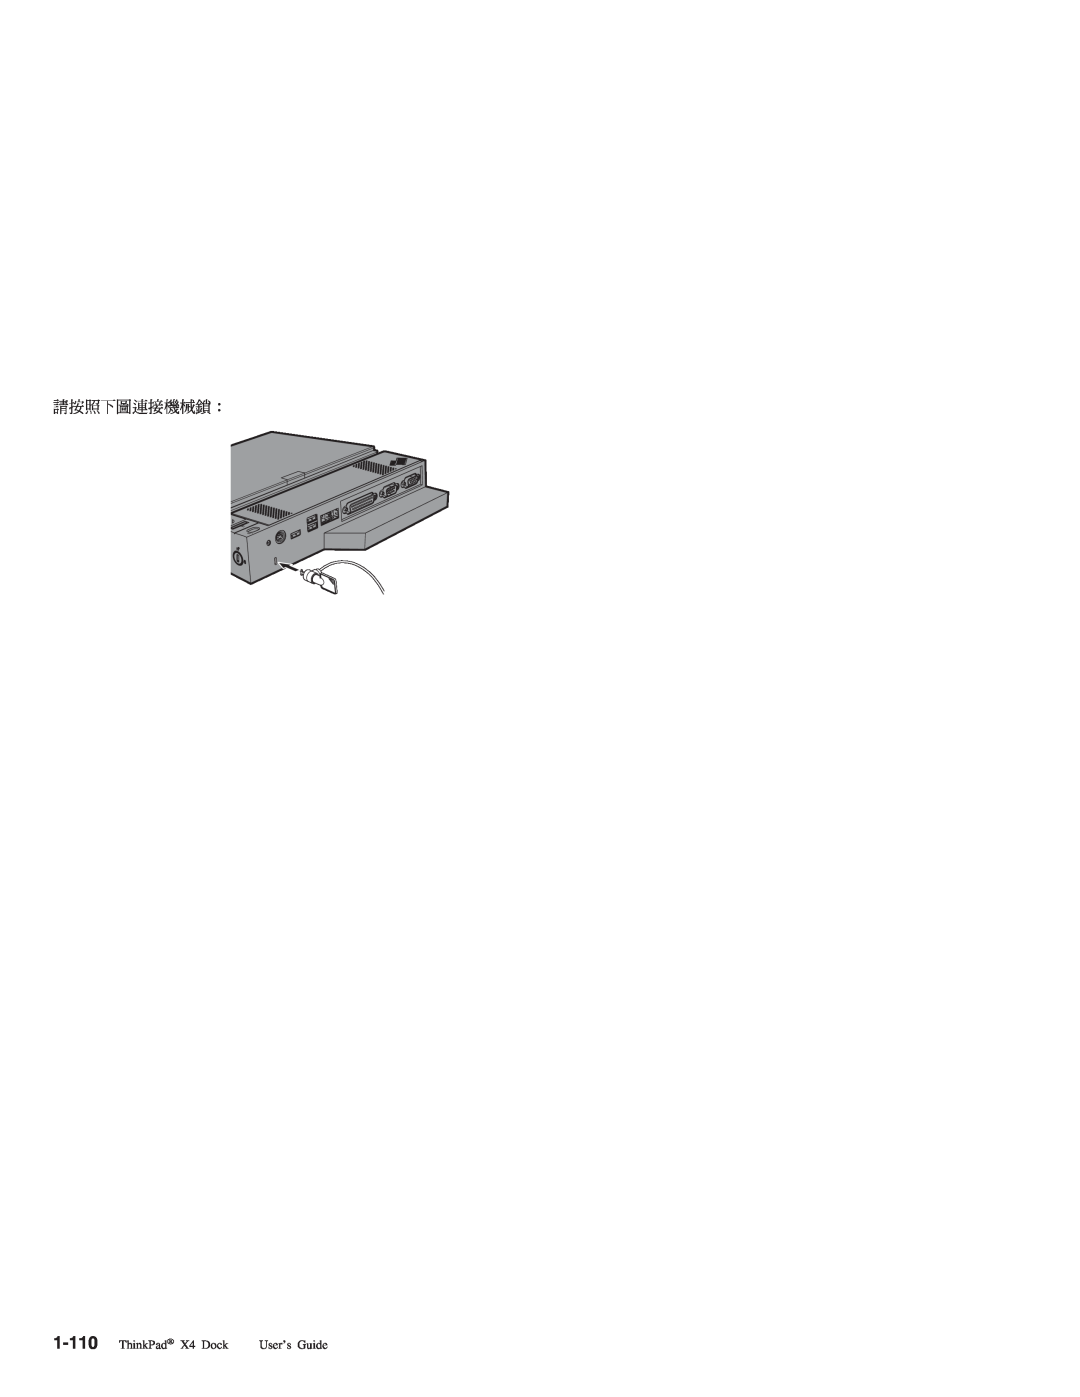 IBM manual ÷ U s ≈±ΩG, ThinkPad X4 Dock, User’s Guide 